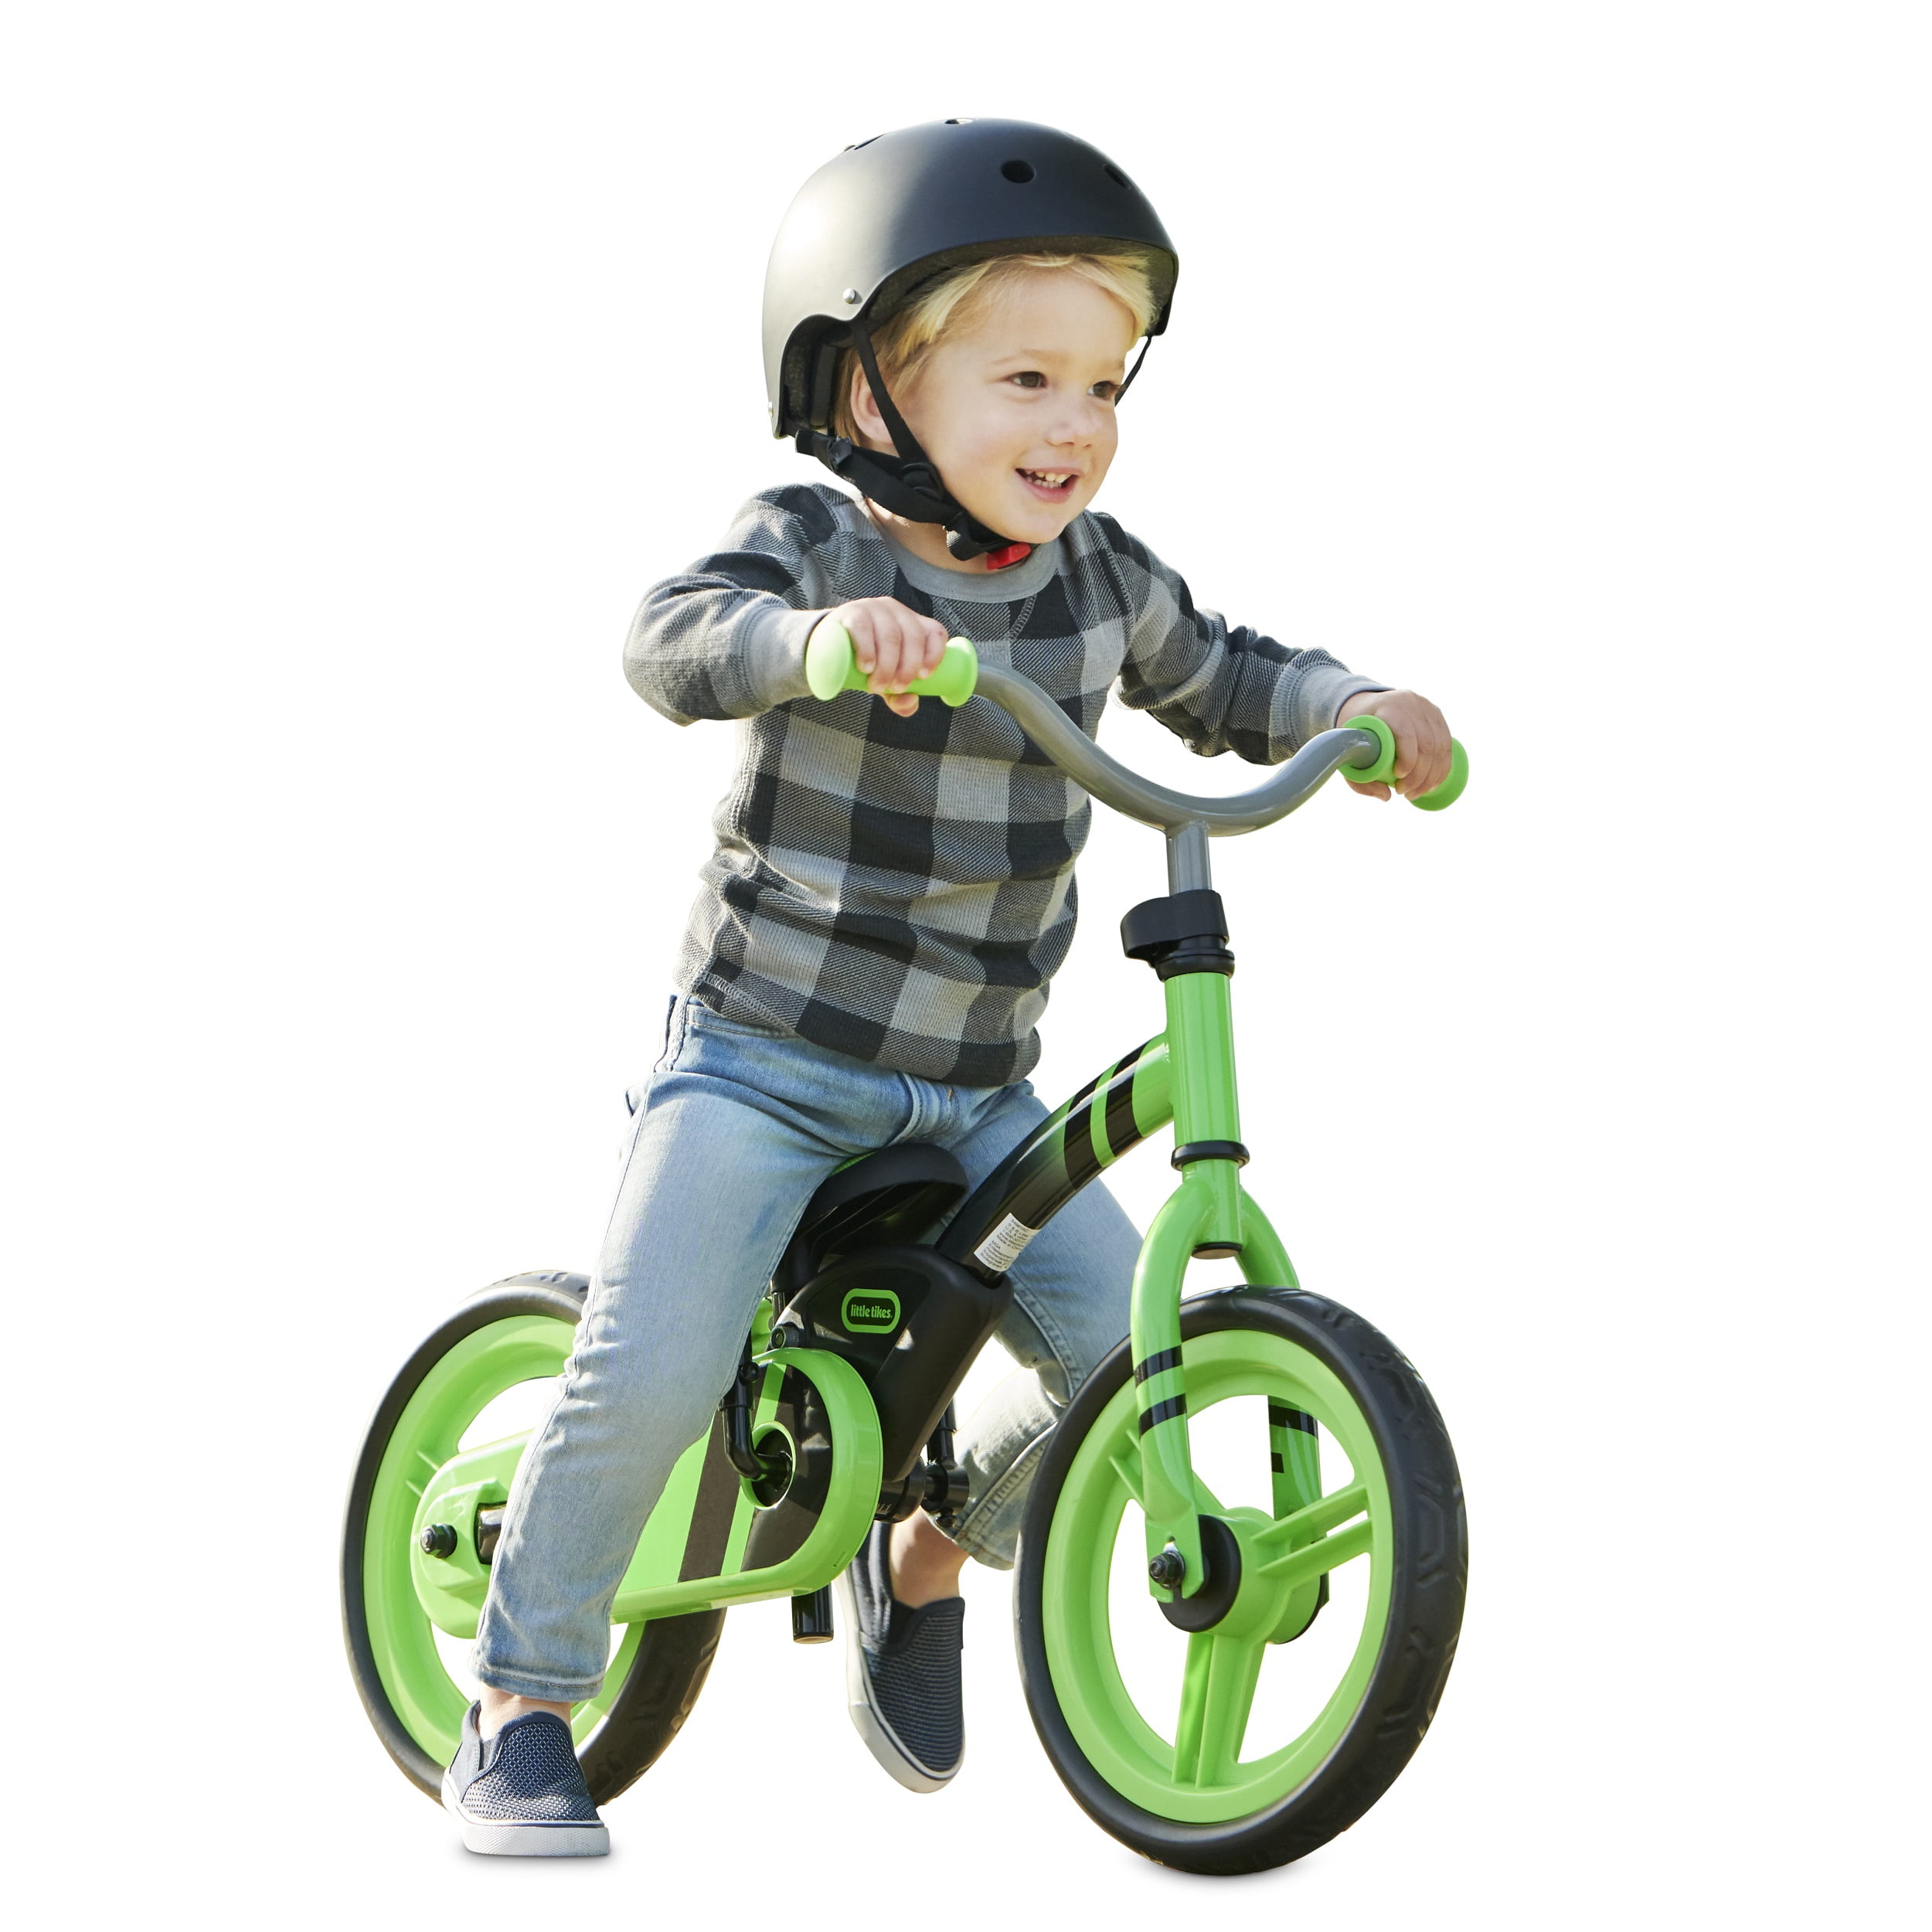 12 Inch Sport Balance Bike Kids Ride Bike children Bicycle Cycling Riding Gifts 